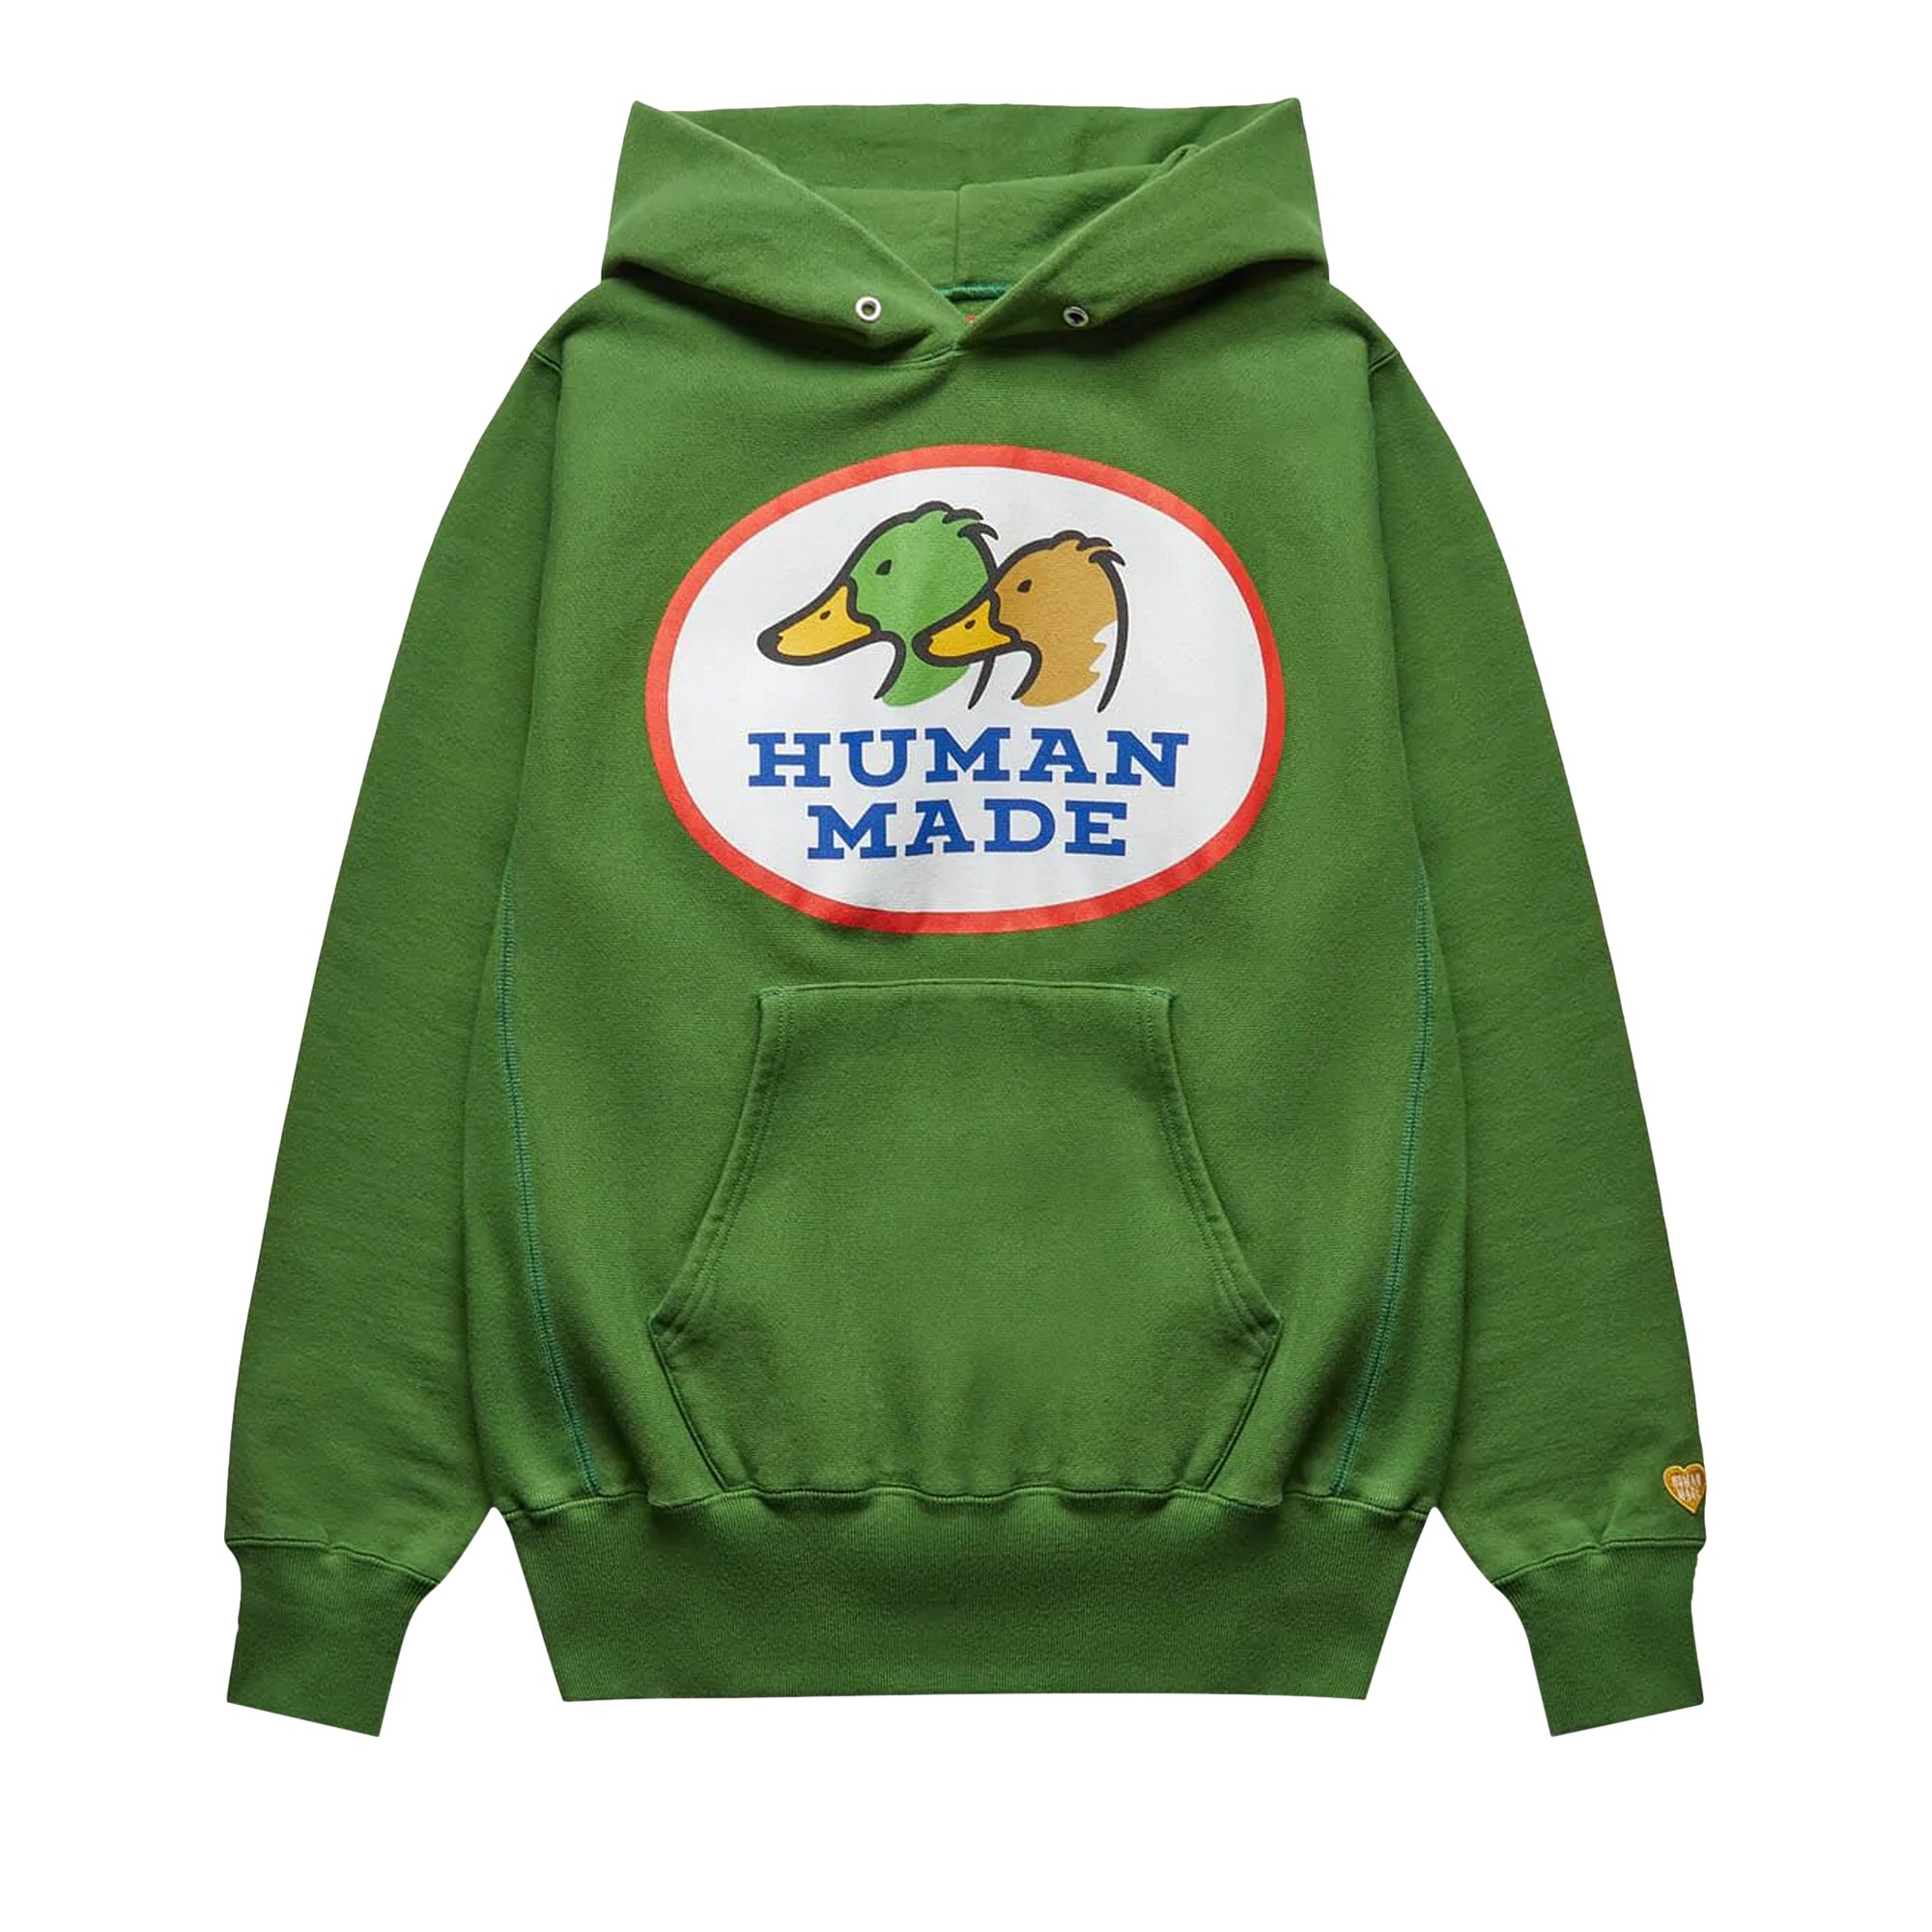 Buy Human Made Pizza Hoodie #1 'Green' - HM24CS024 GREE | GOAT